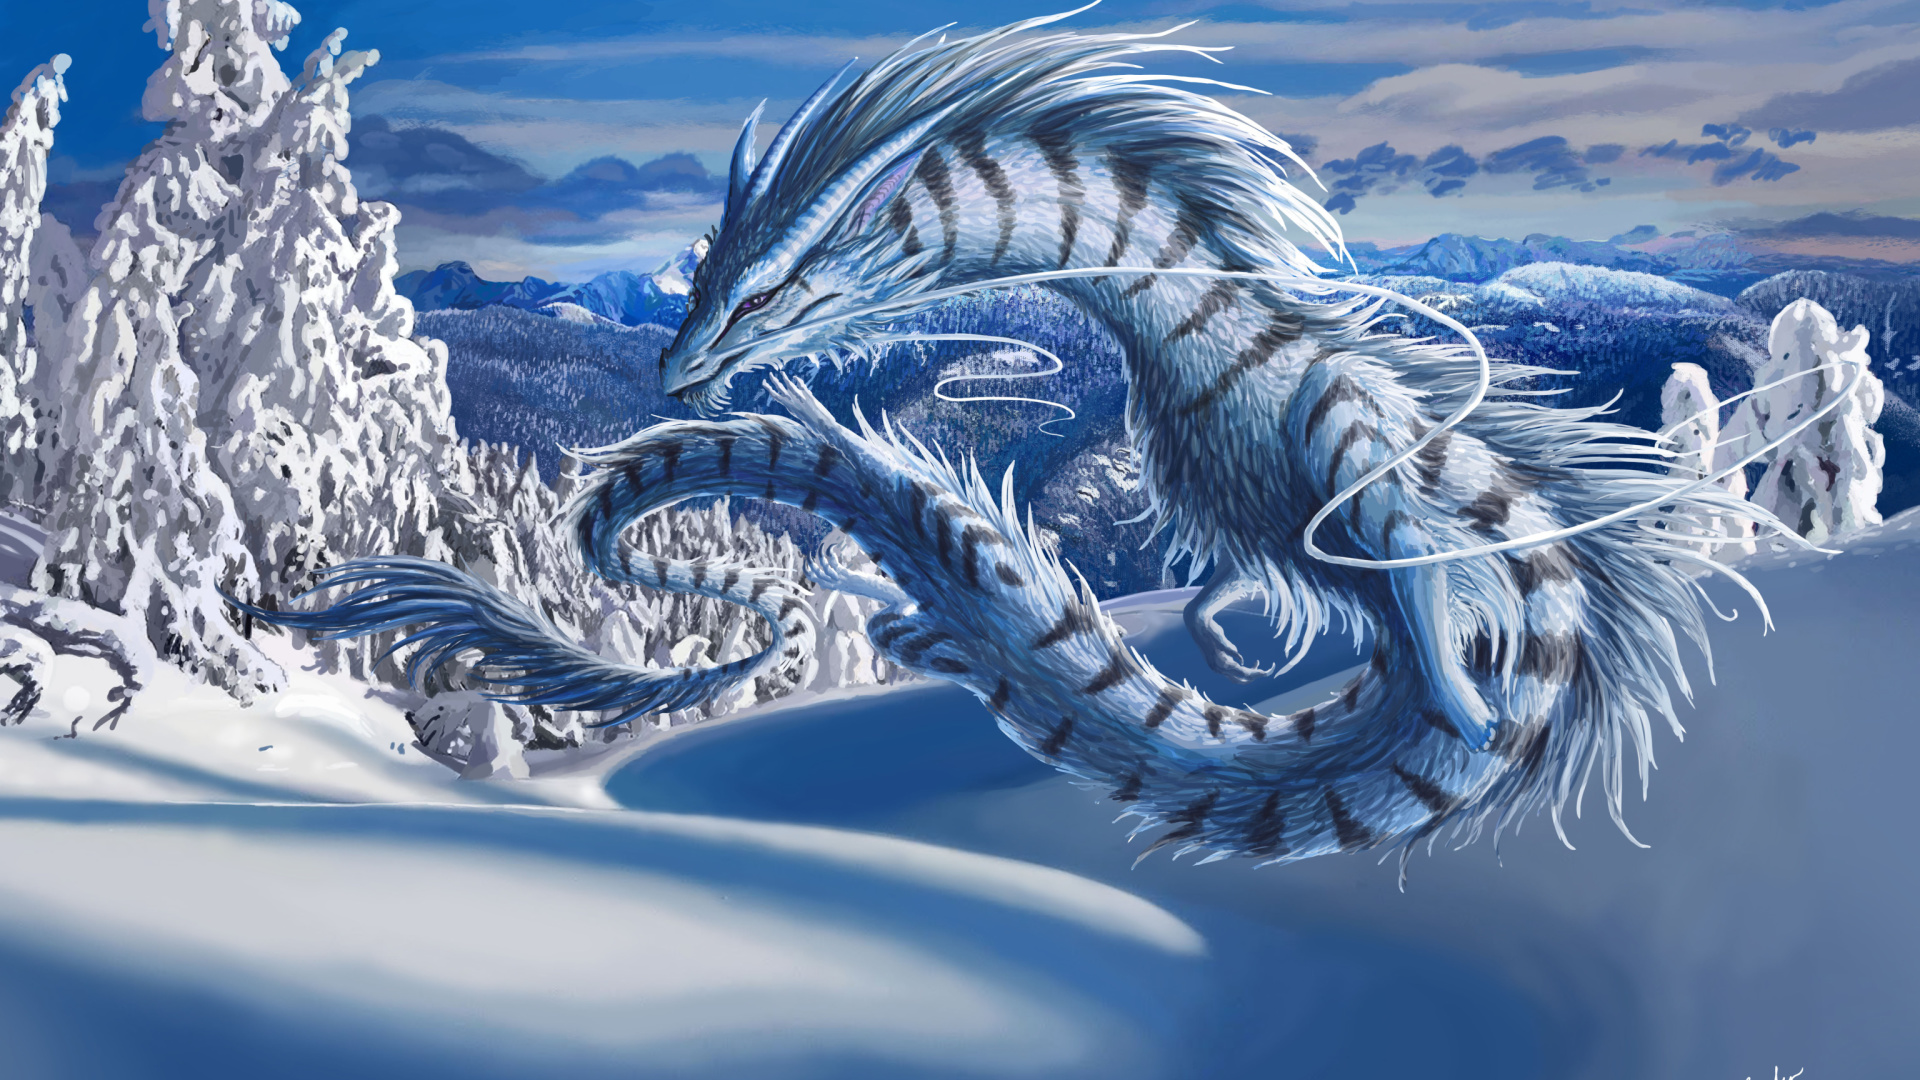 Winter Dragon wallpaper 1920x1080